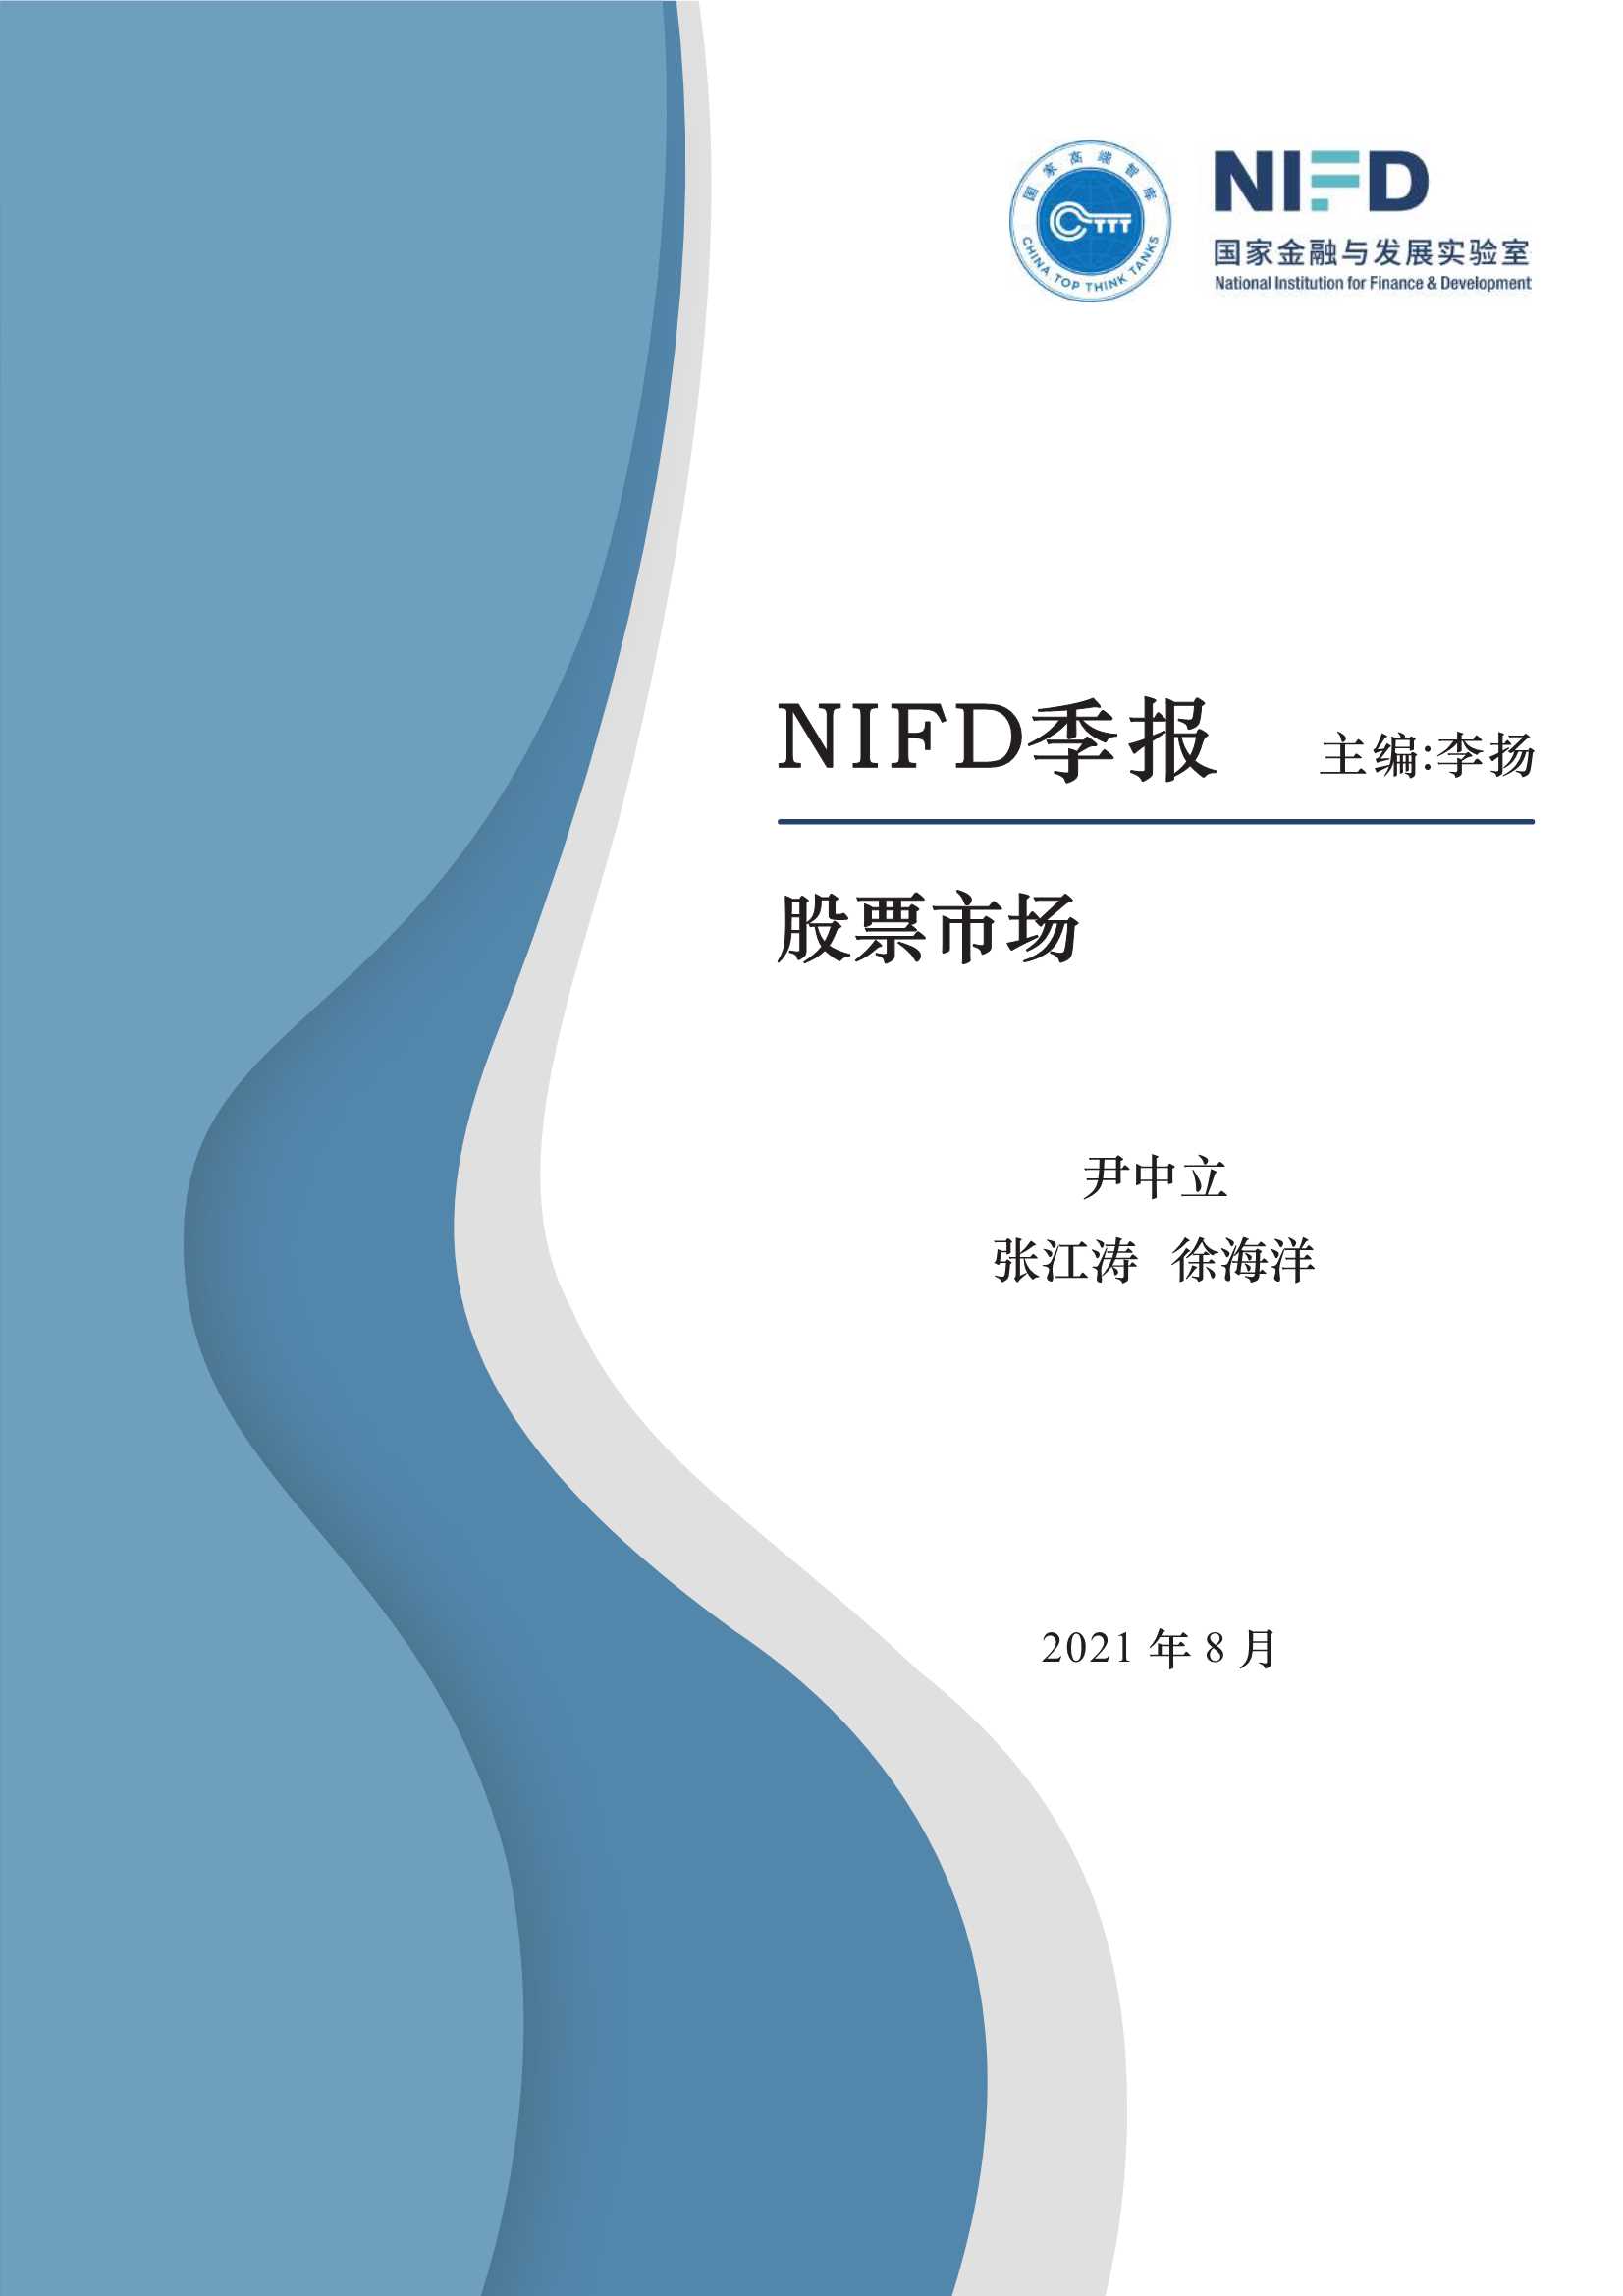 NIFD-2021Q2股票市场-2021.08-15页